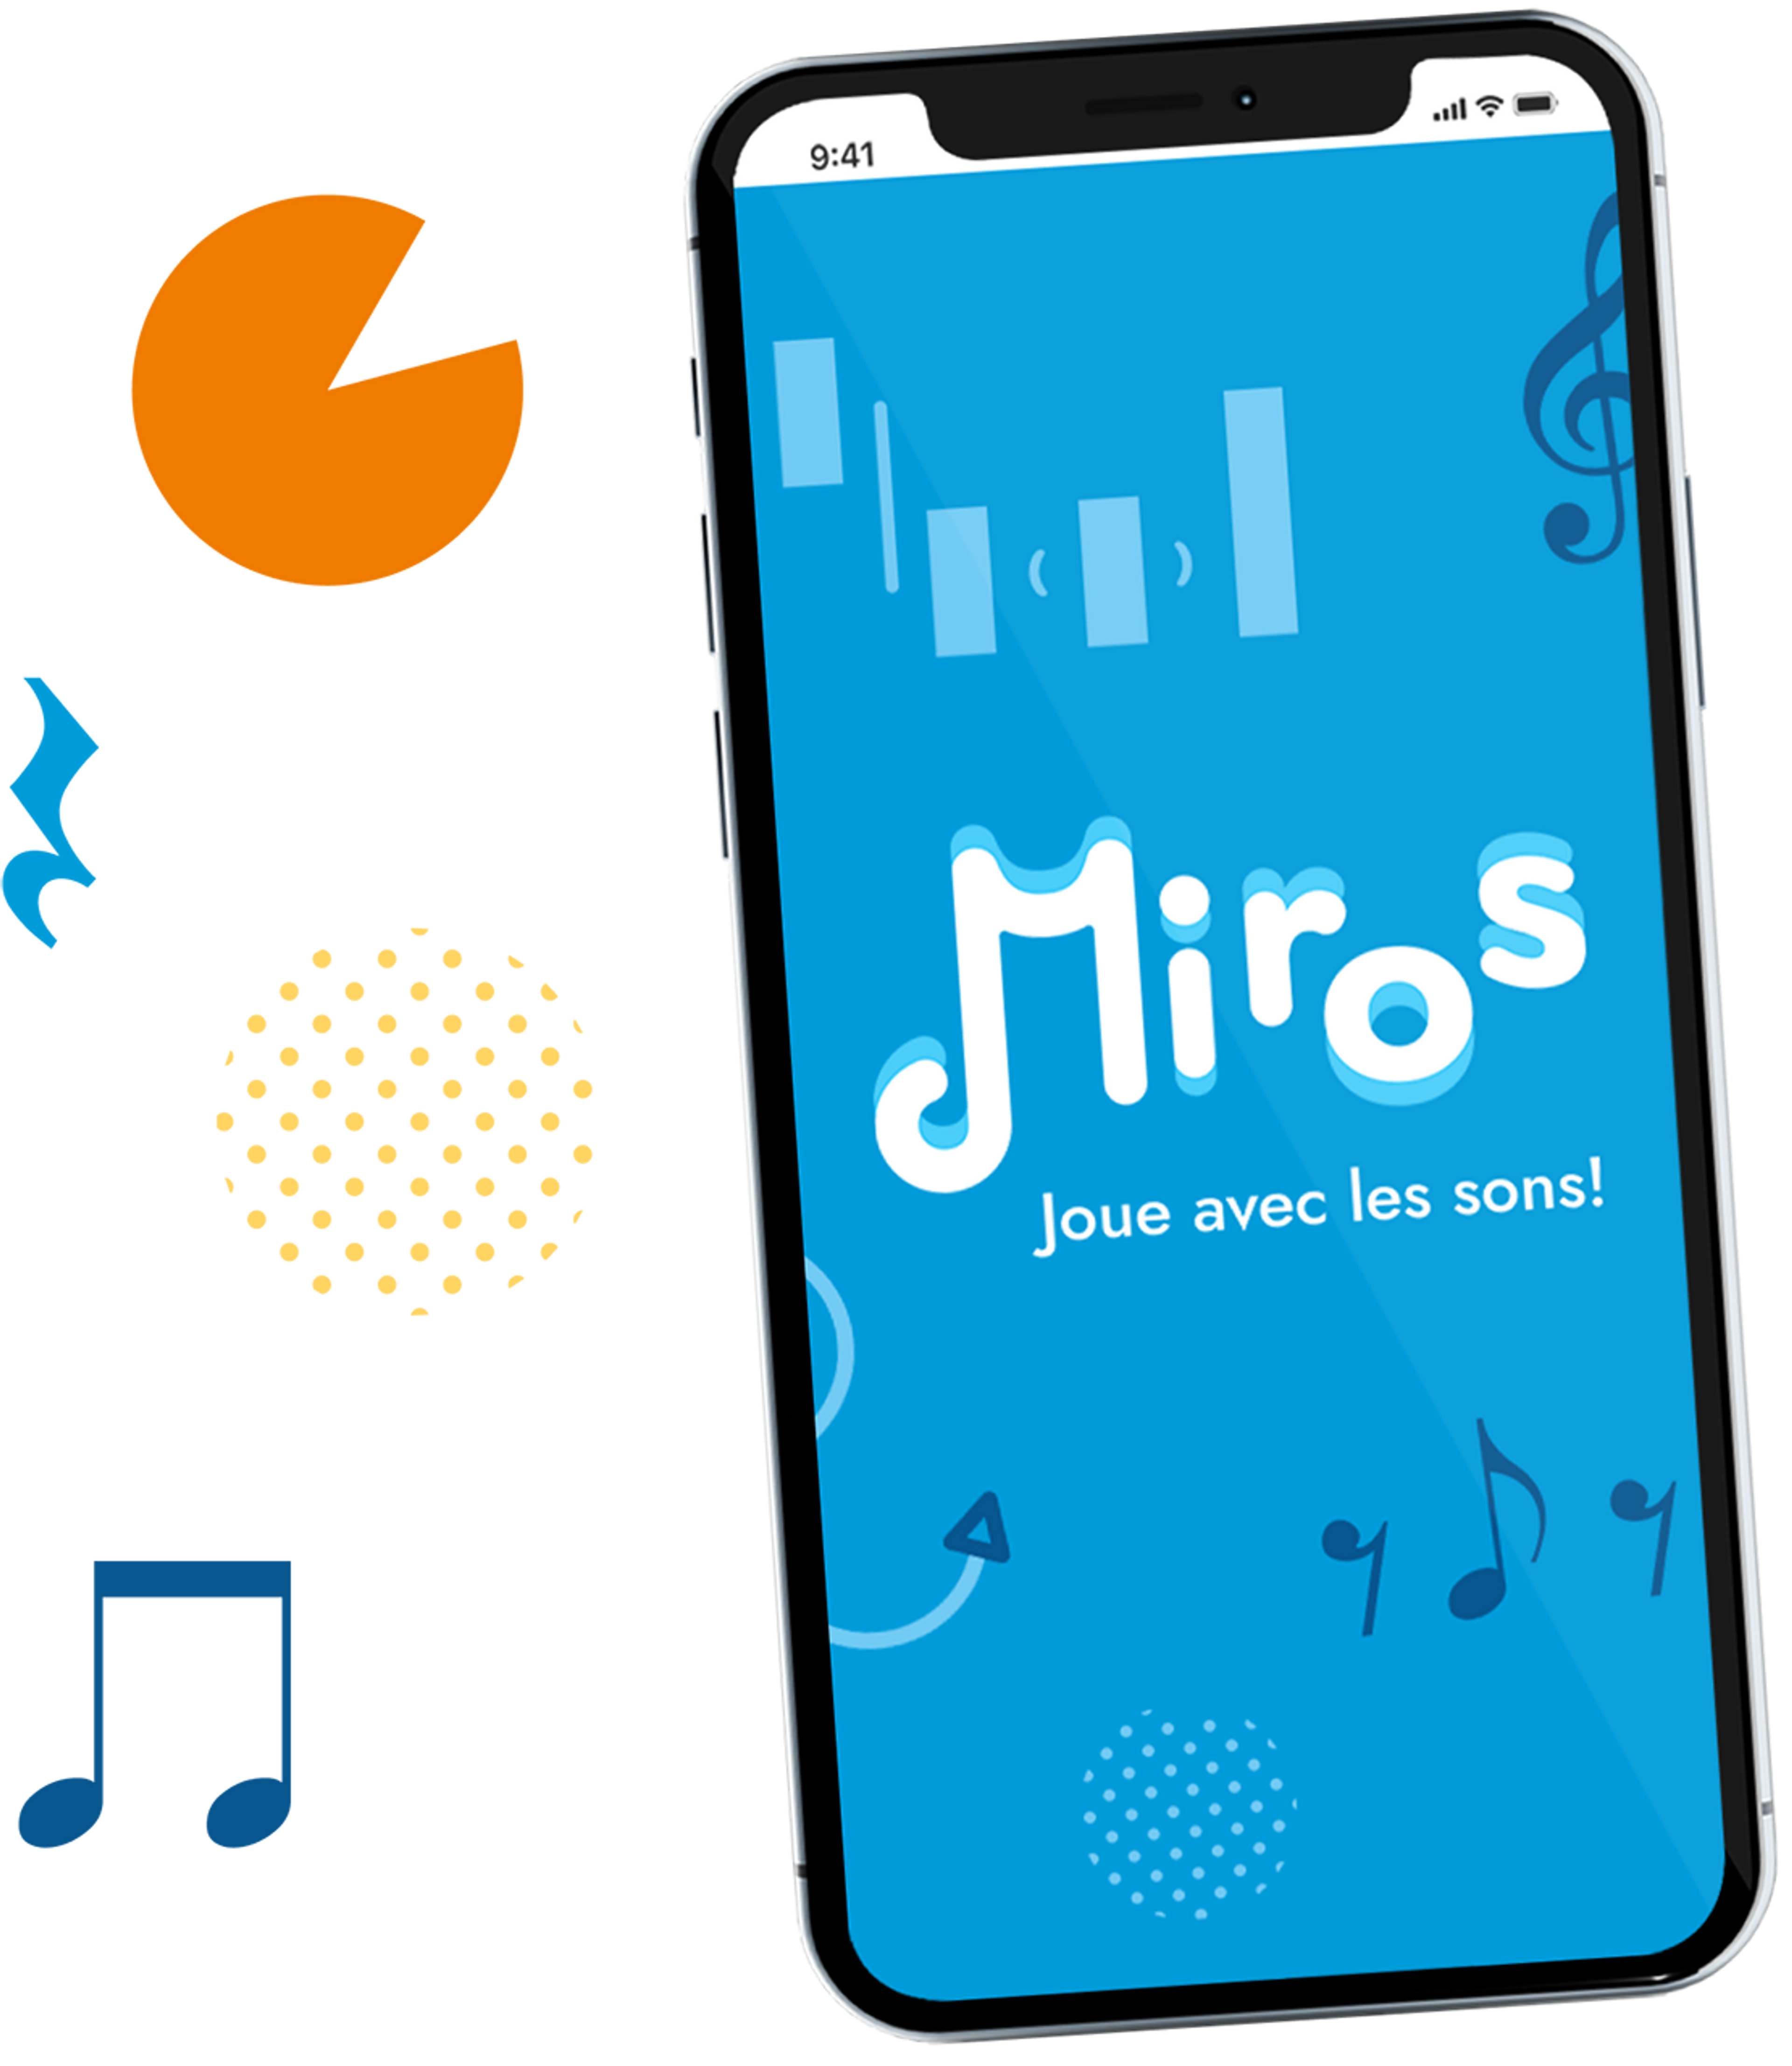 The Miros digital diary